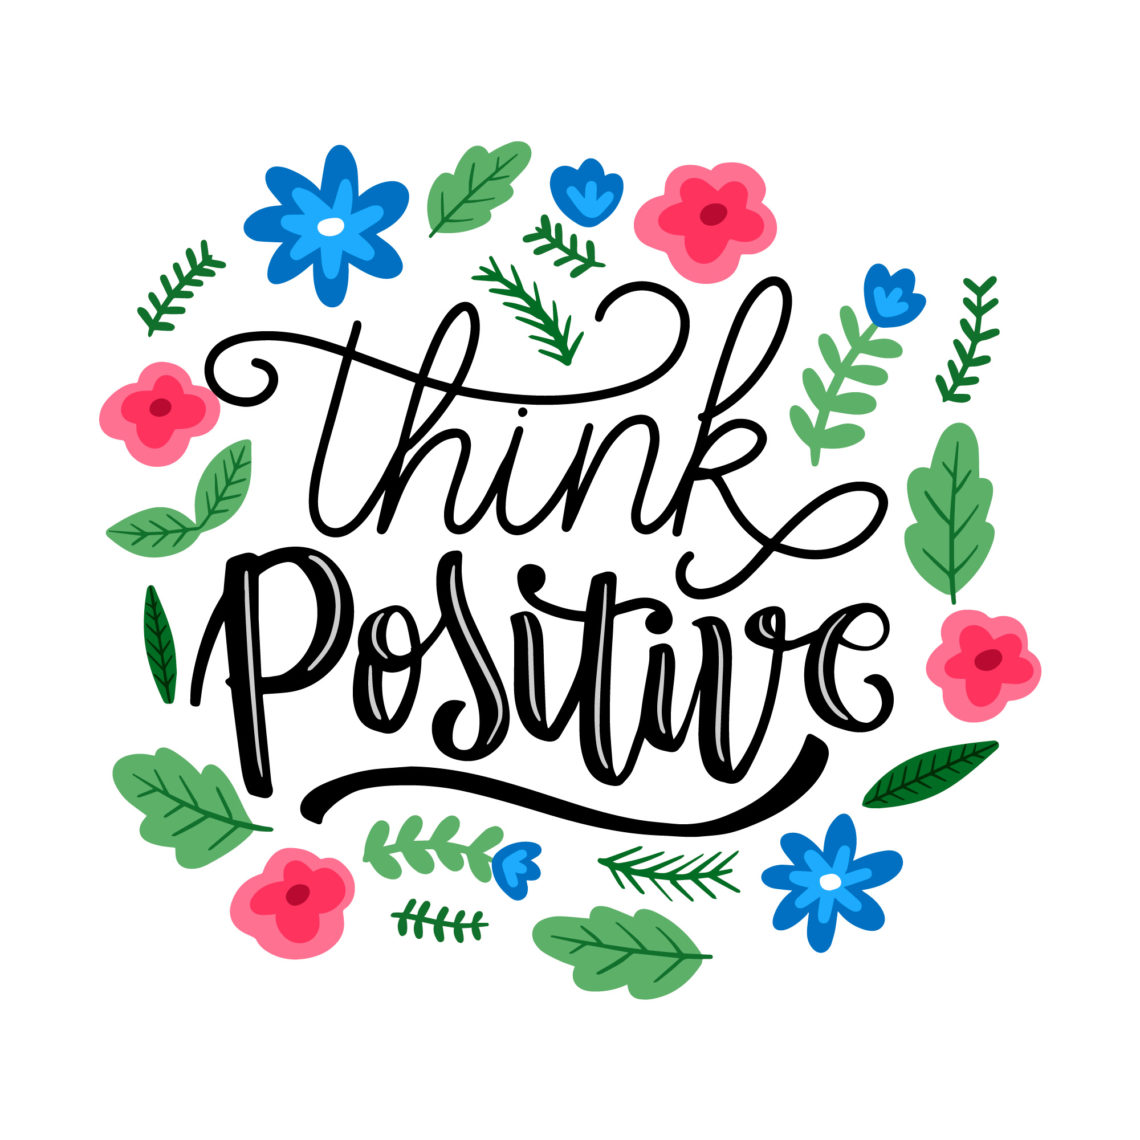 Think positive : illunimes, la communication positive